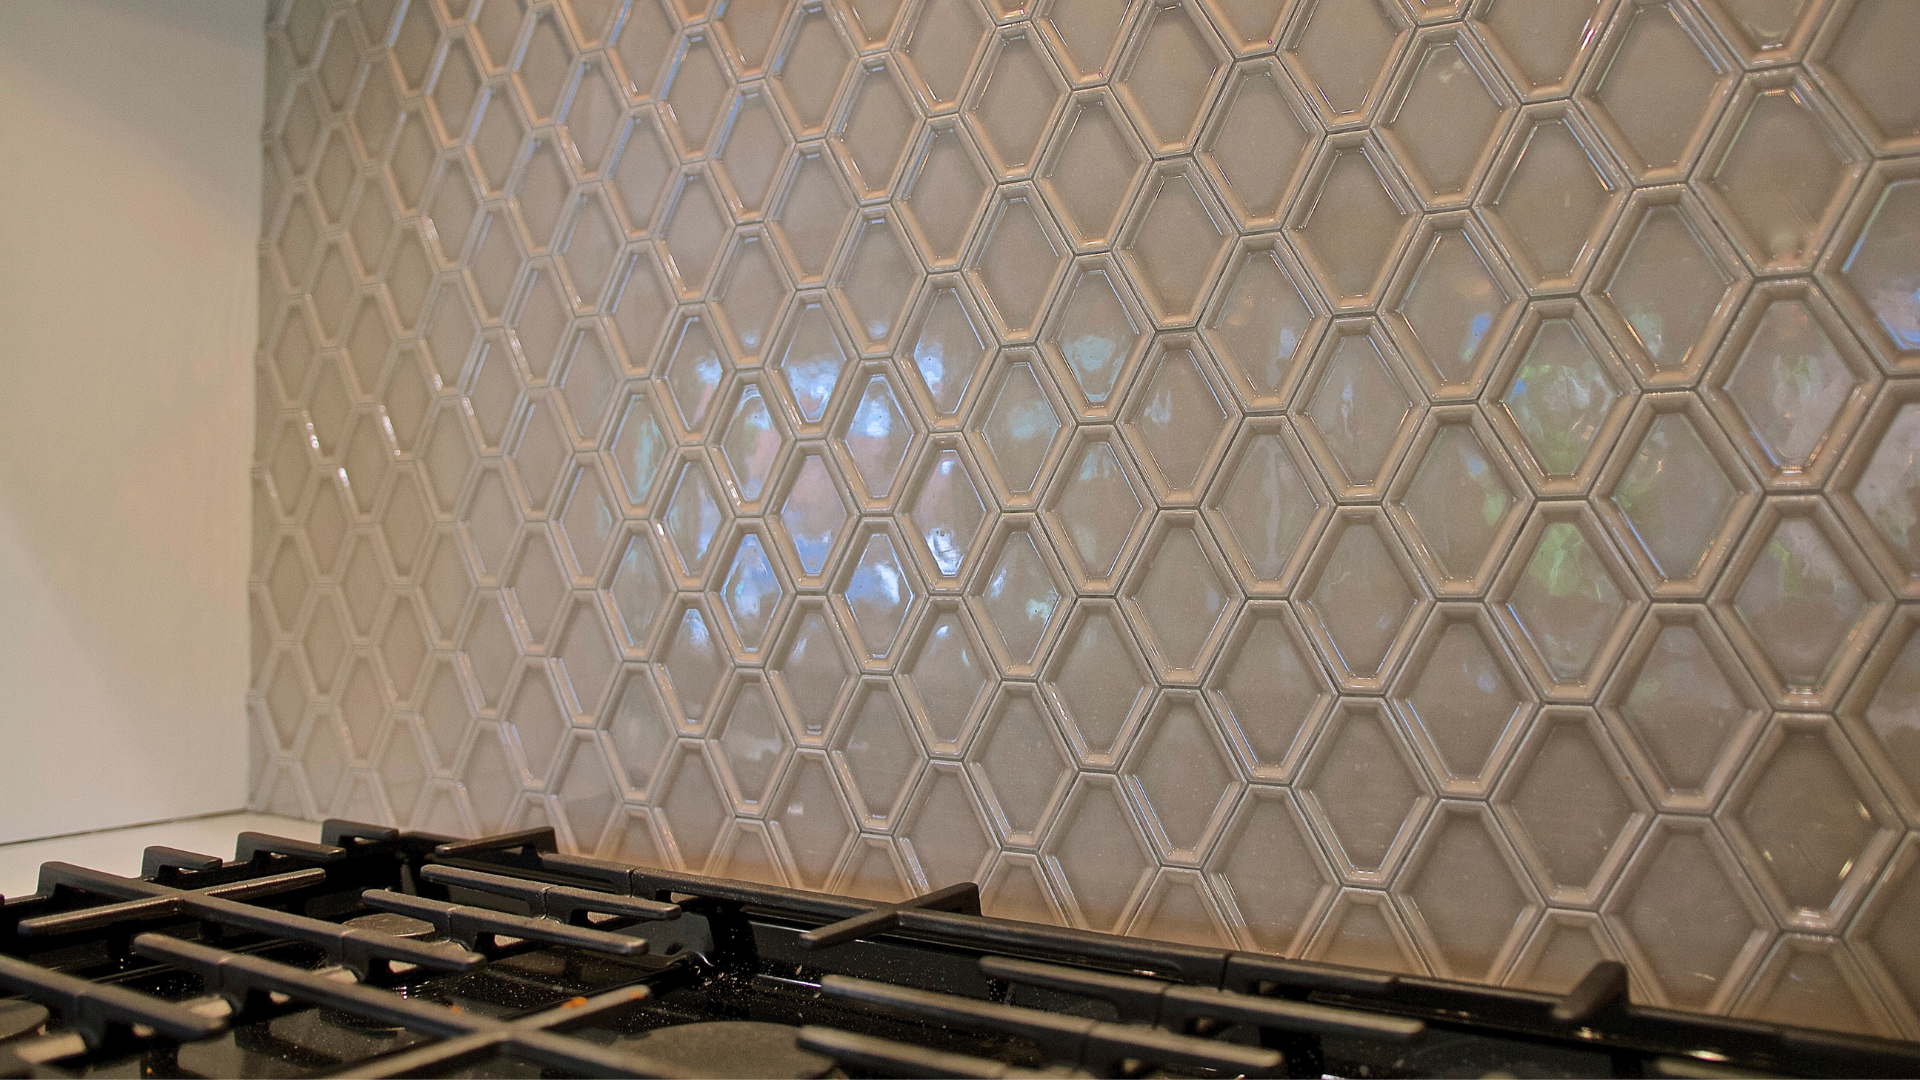 Glossy Hexagon Tile Kitchen Backsplash Above Gas Stove in Kitchen